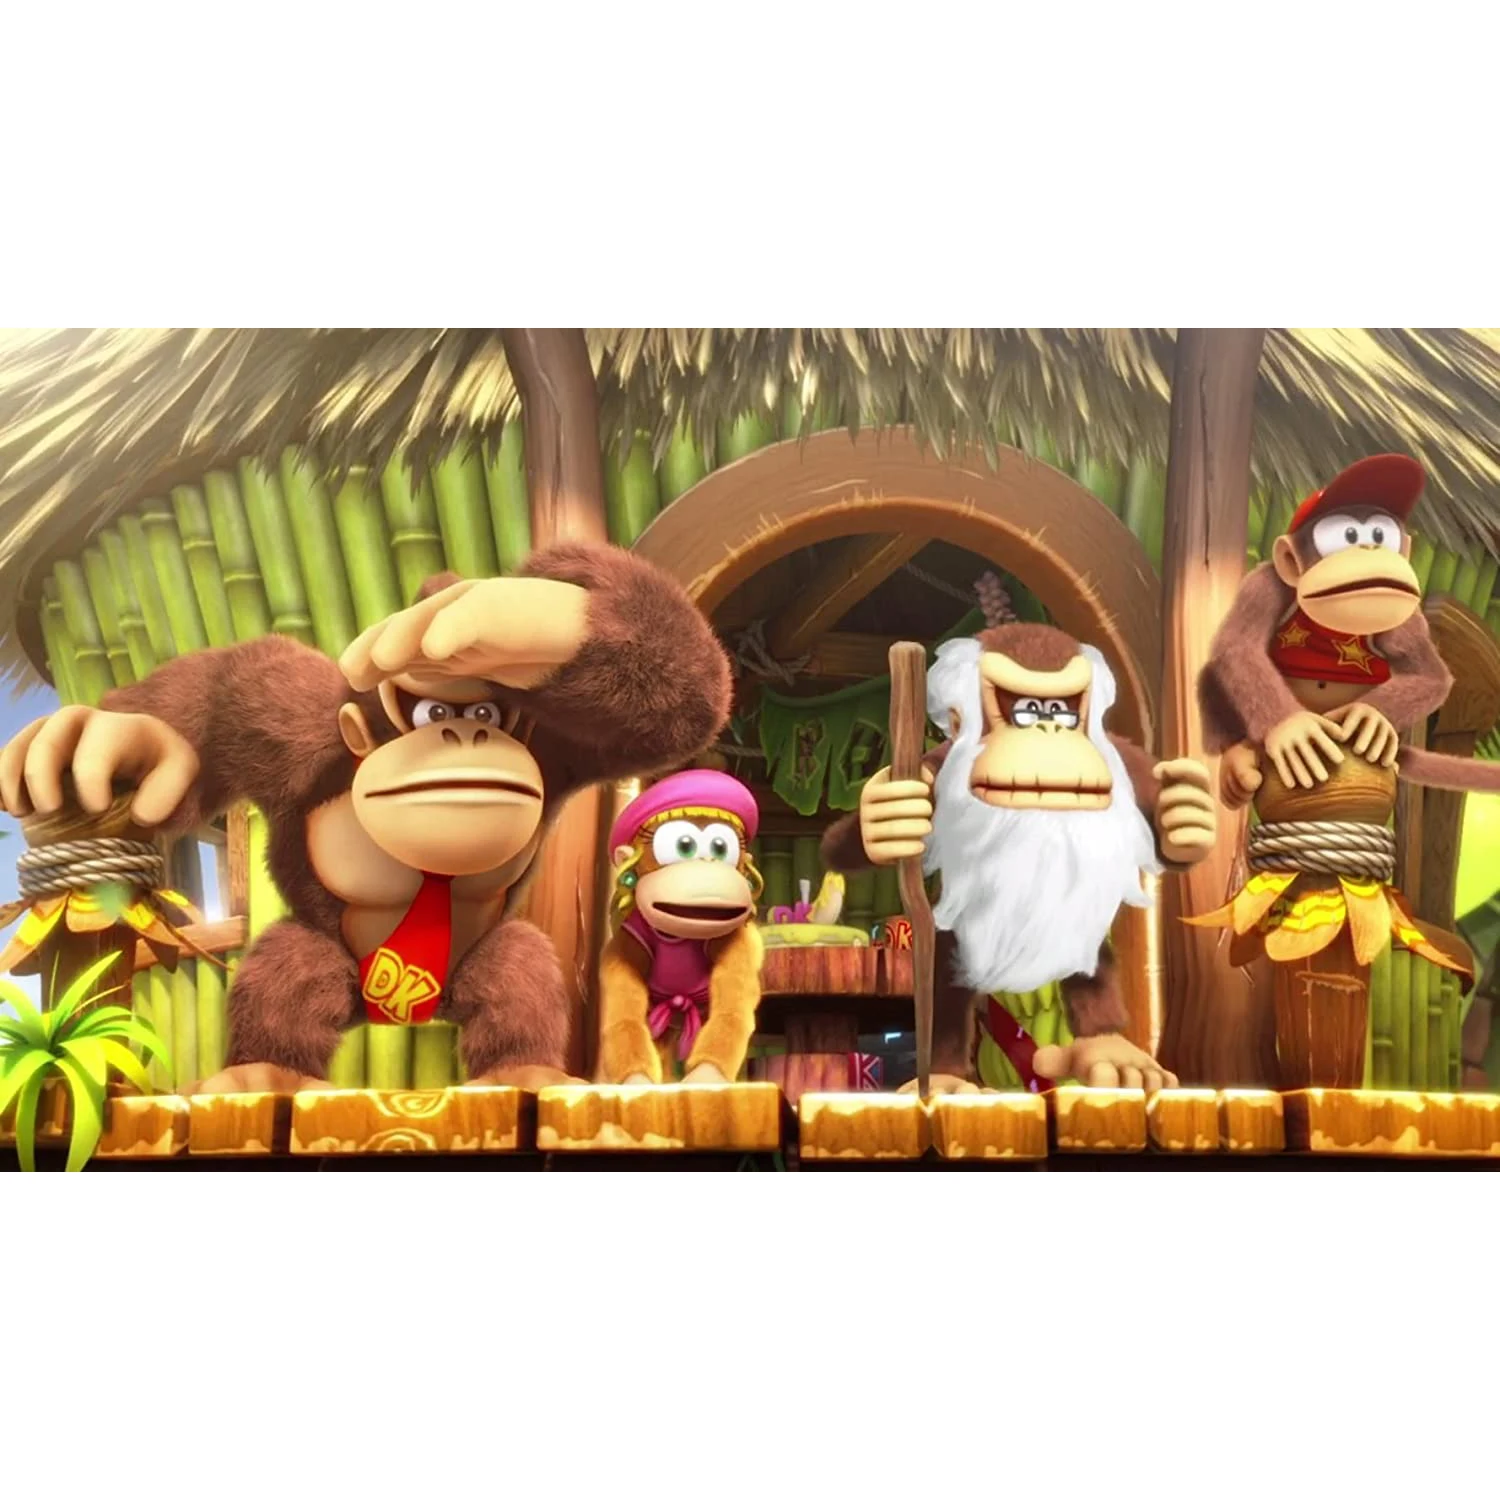 Nintendo switch donkey. Донки Конг Нинтендо свитч. Donkey Kong Country Nintendo Switch. Donkey Kong Tropical Freeze Nintendo Switch. Donkey Kong Country: Tropical Freeze.